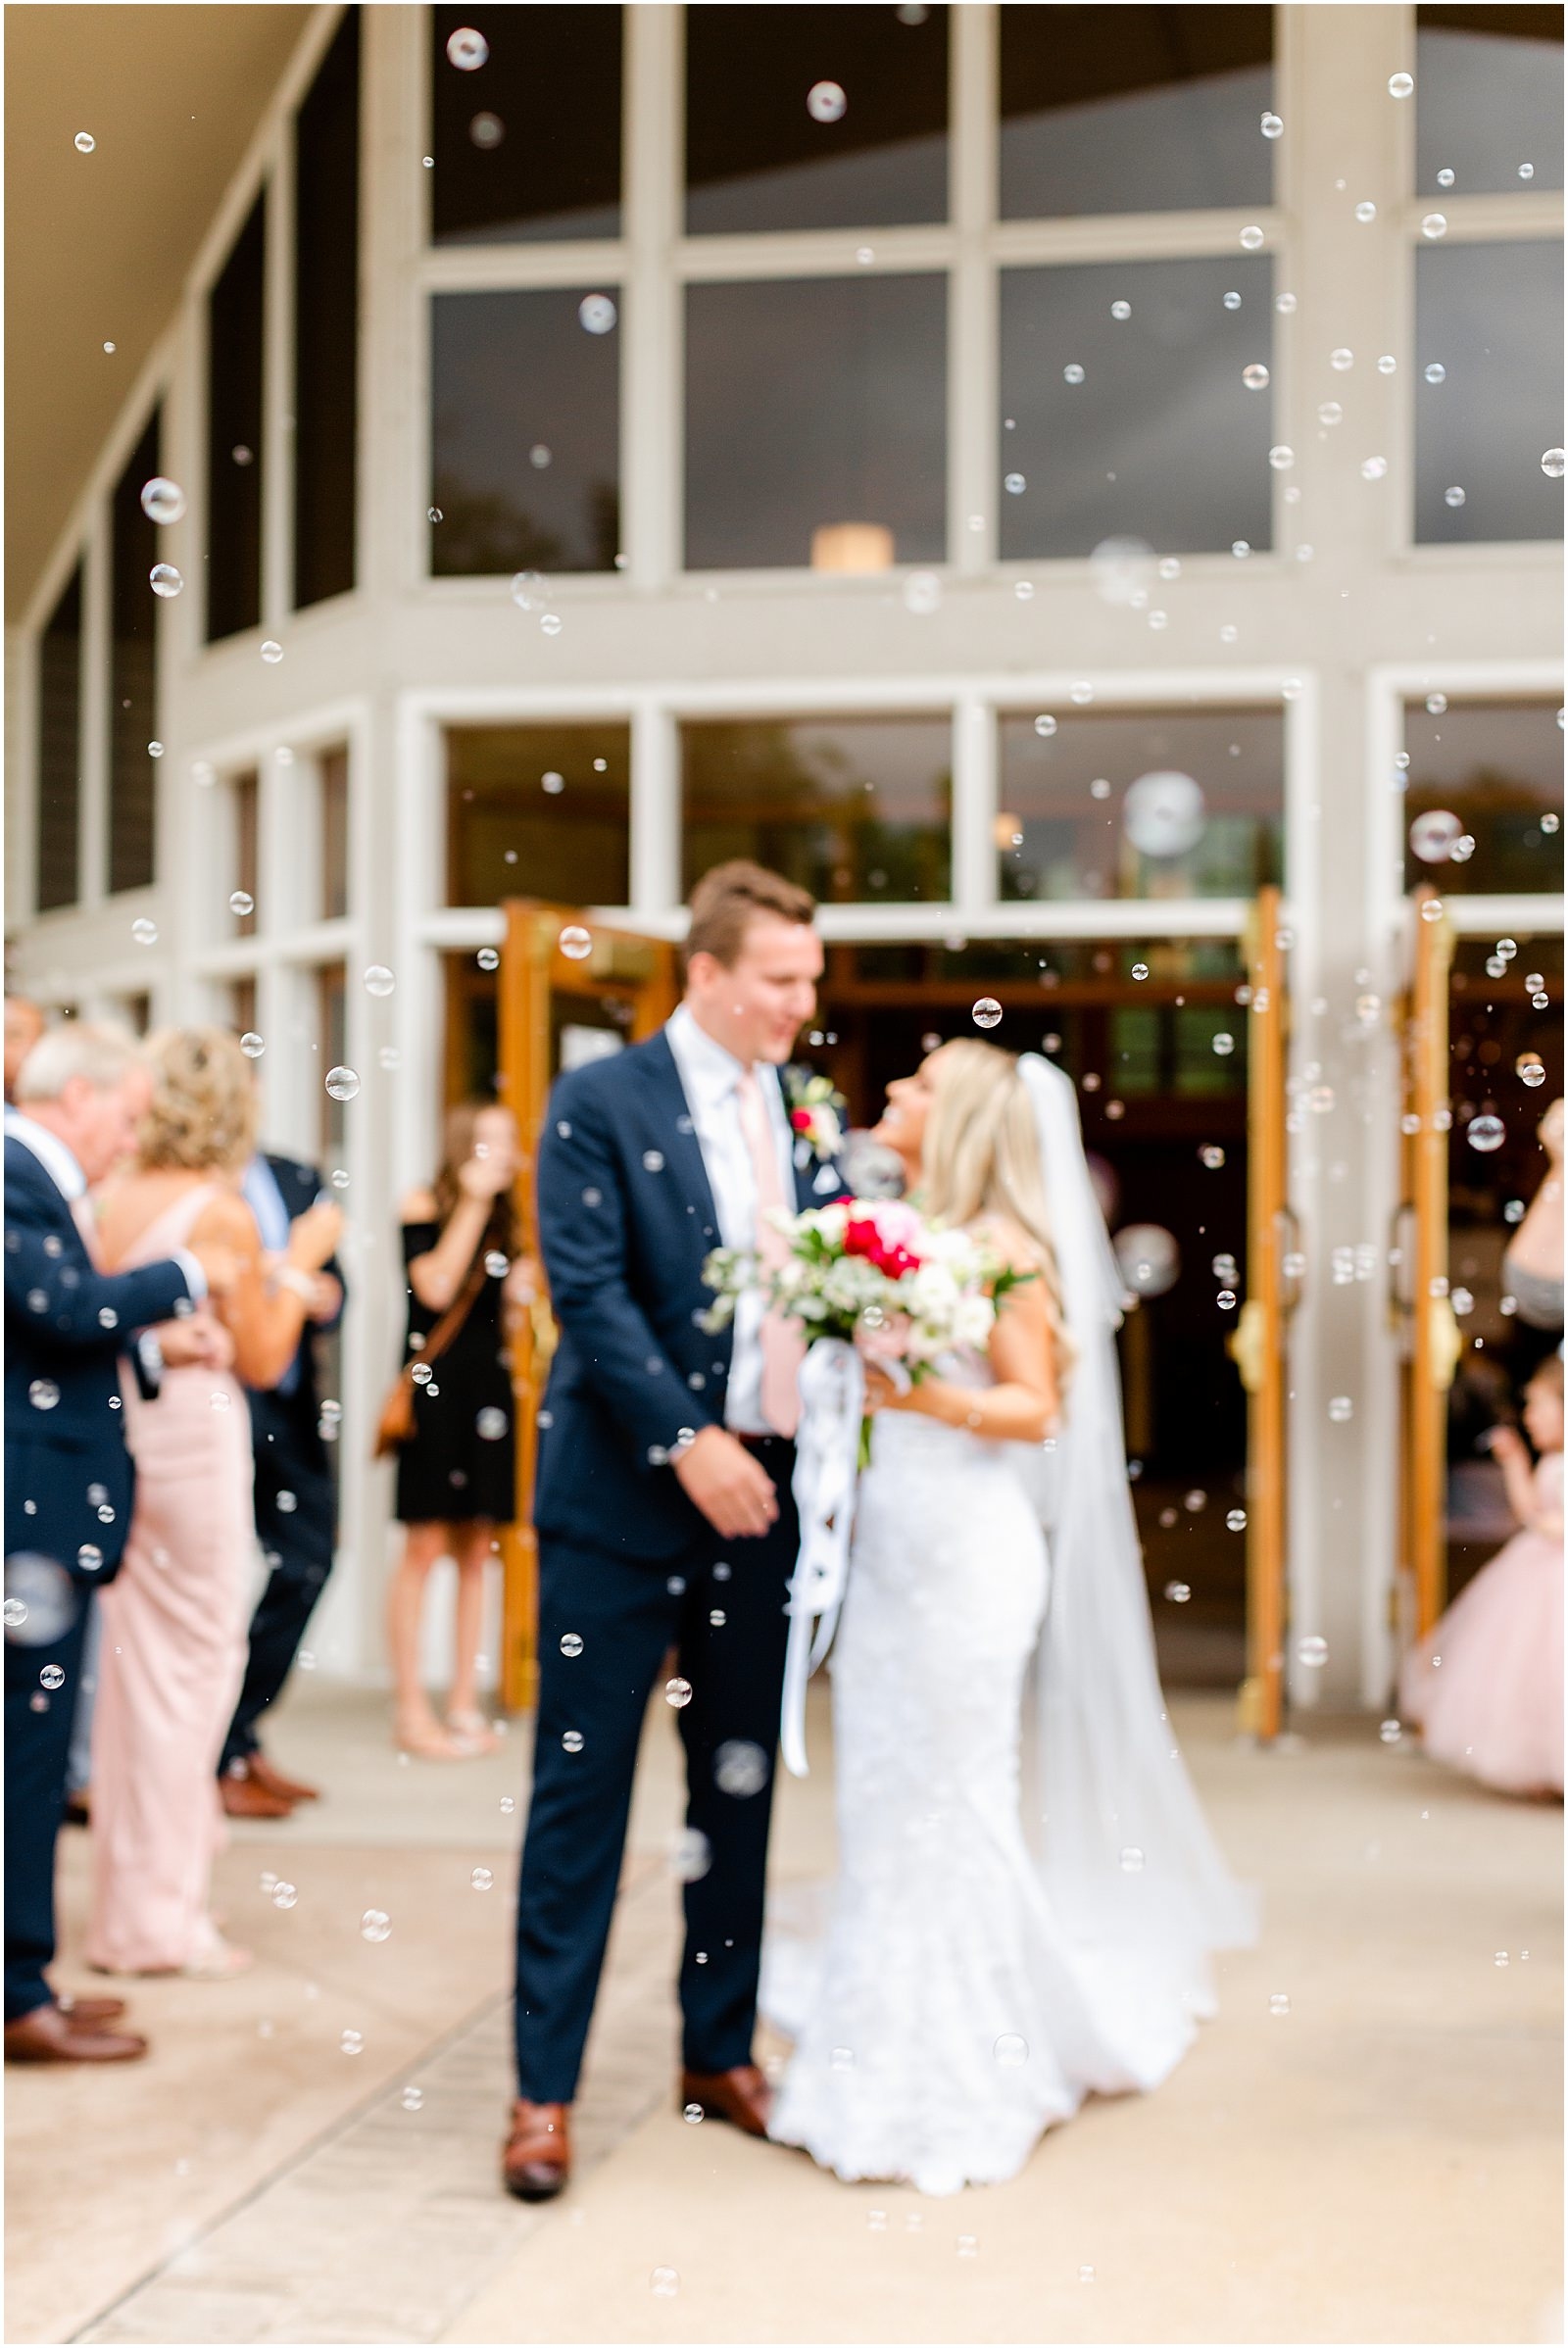 An Evansville Country Club Wedding | Madison and Christiaan | Bret and Brandie | Evansville Photographers | @bretandbrandie-0134.jpg